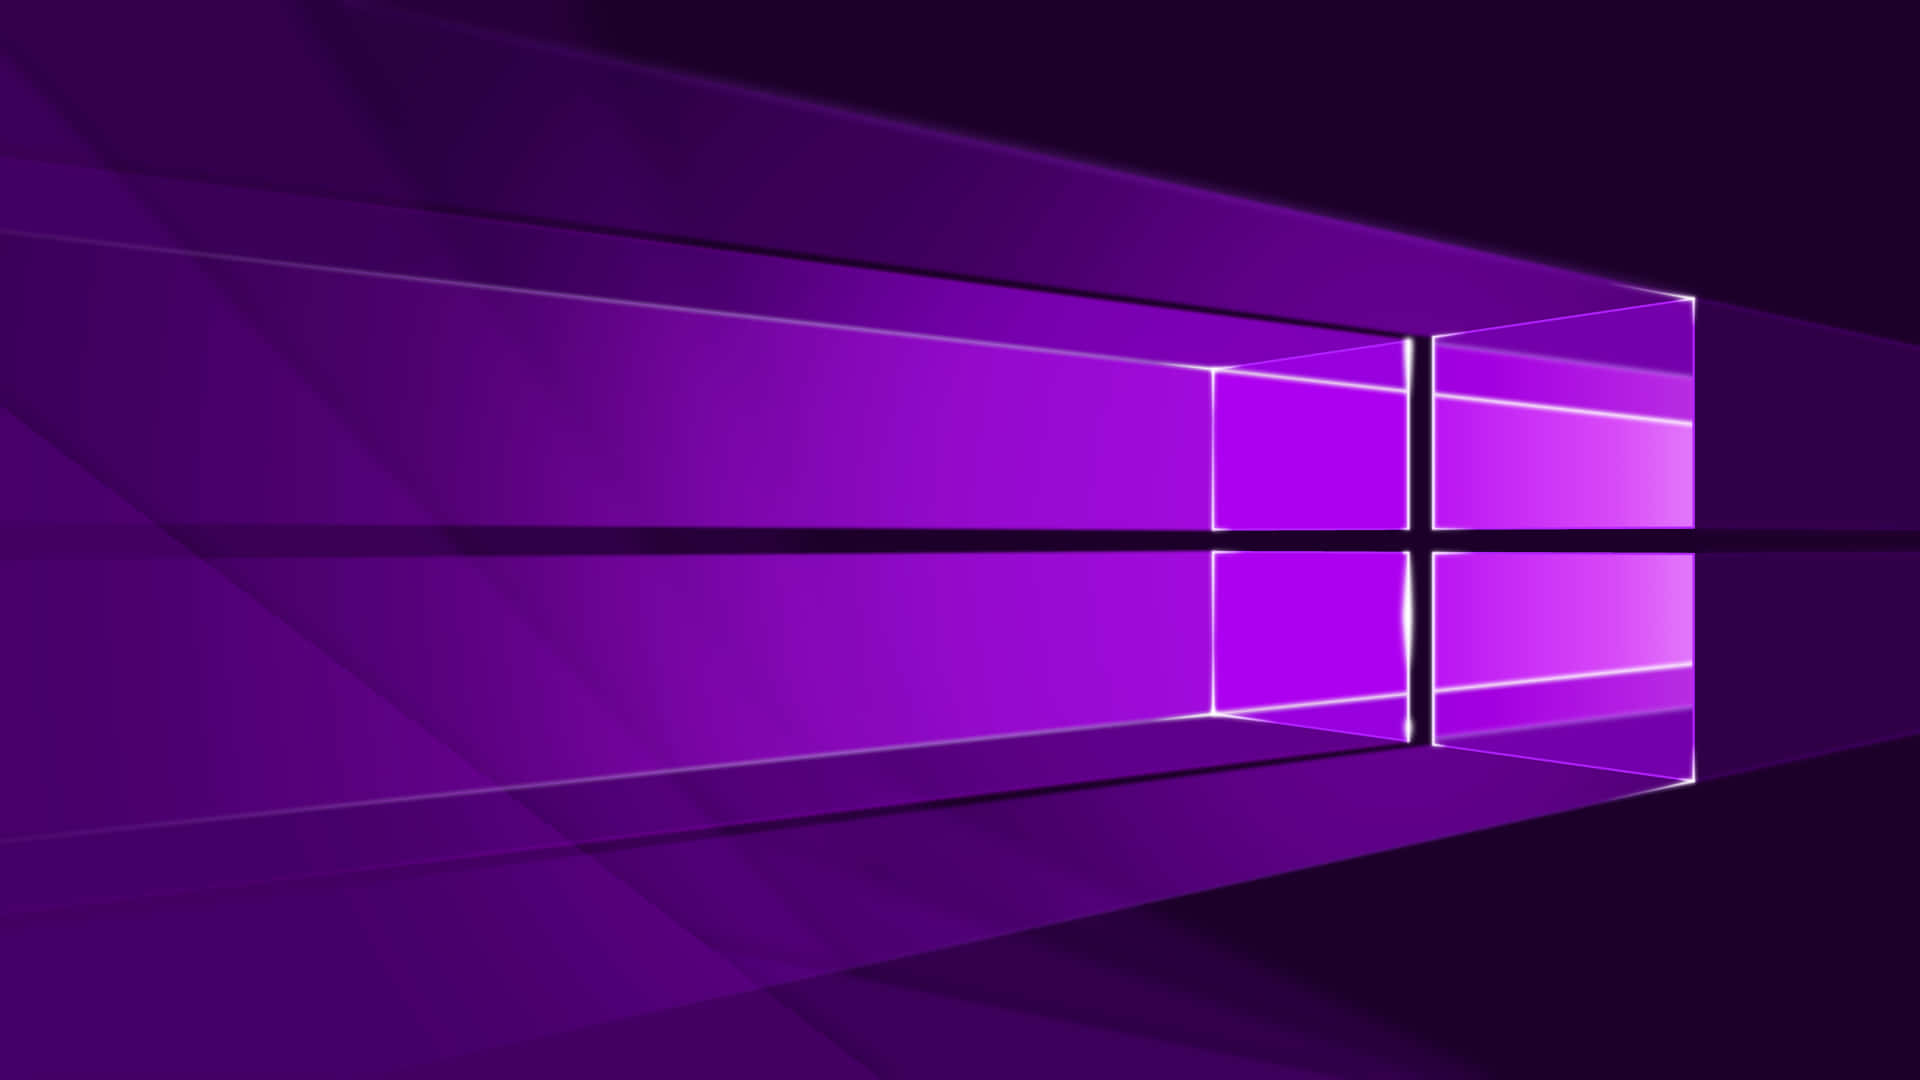 Sunset Windows 10 Wallpaper - Minimalistic 1366x768 Wallpapers in 2023